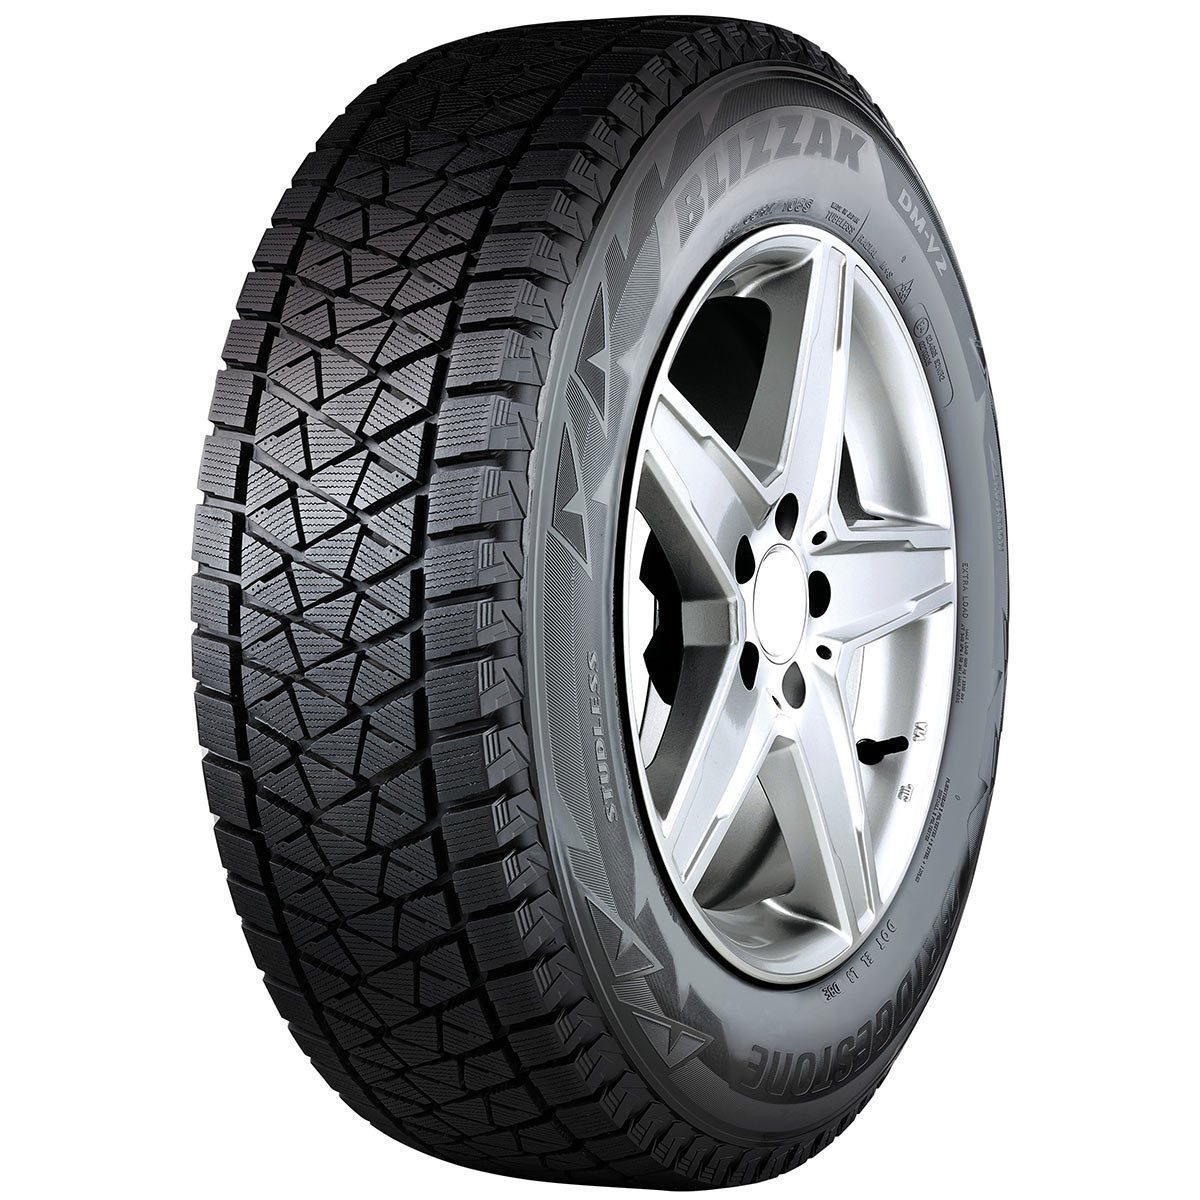 Bridgestone BLIZZAK DM-V2 Winter Radial Tire 245/55R19 103T 